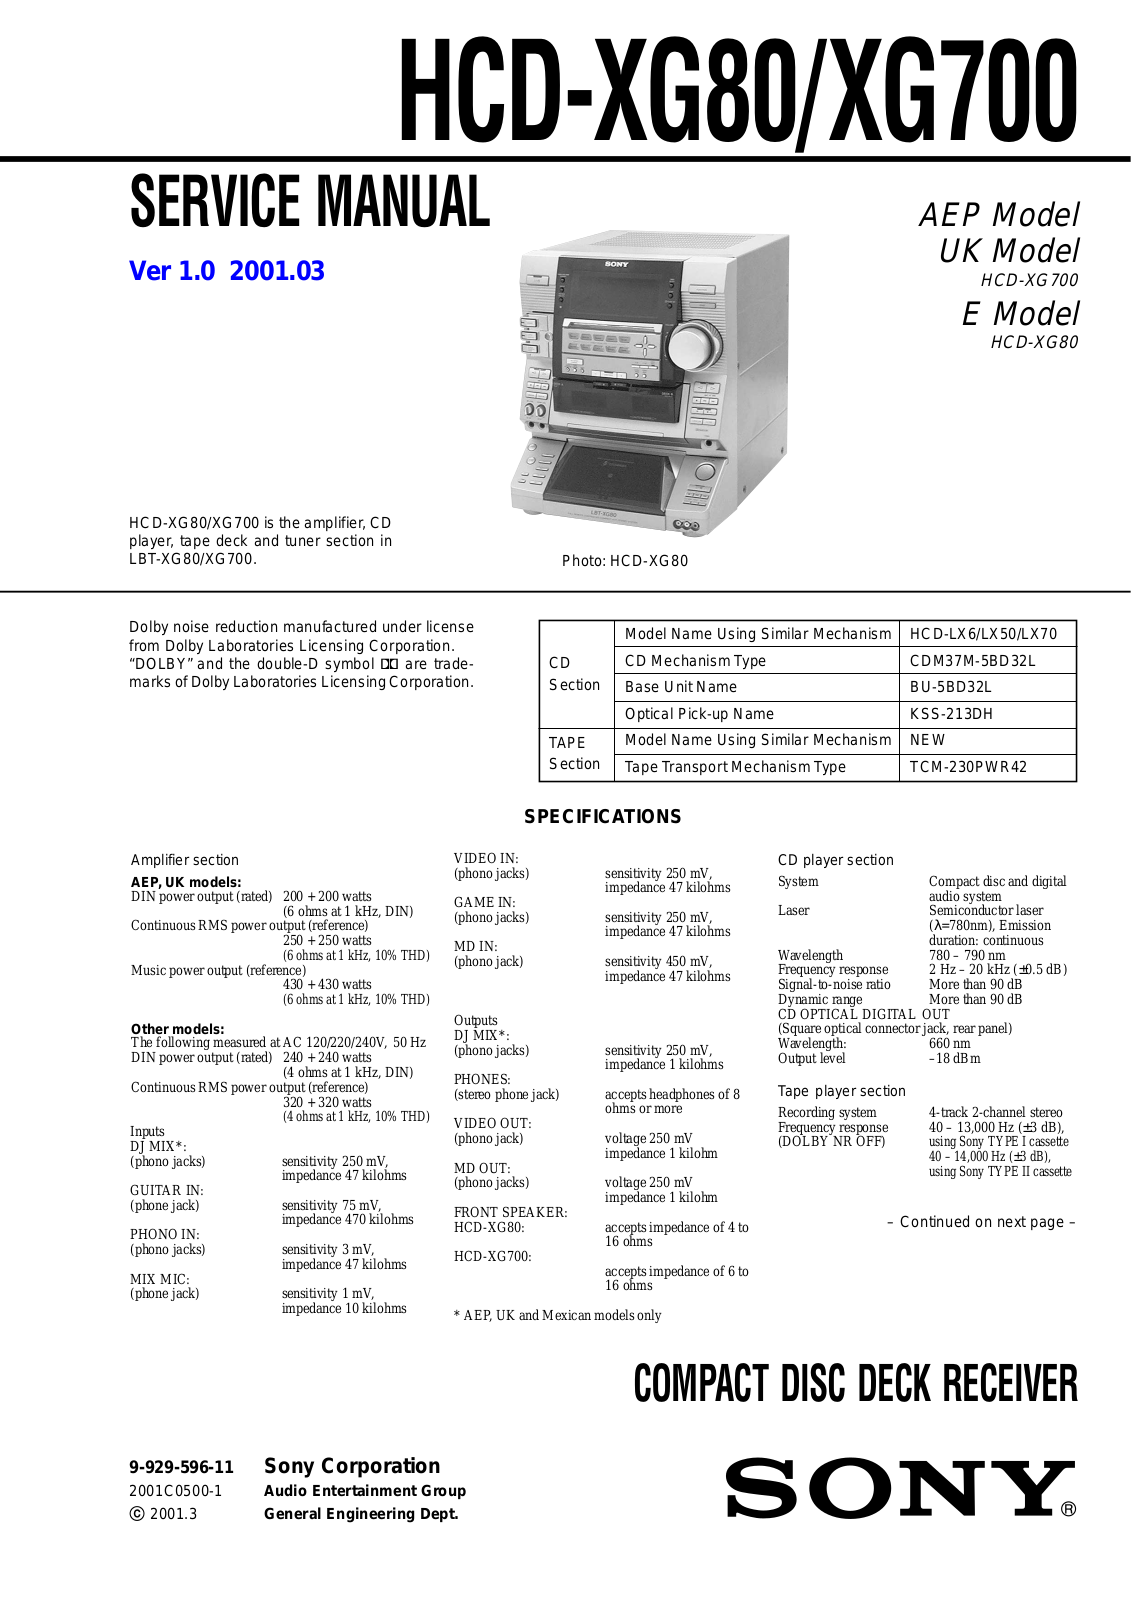 Sony HCD-XG80, HCD-XG700 Service manual